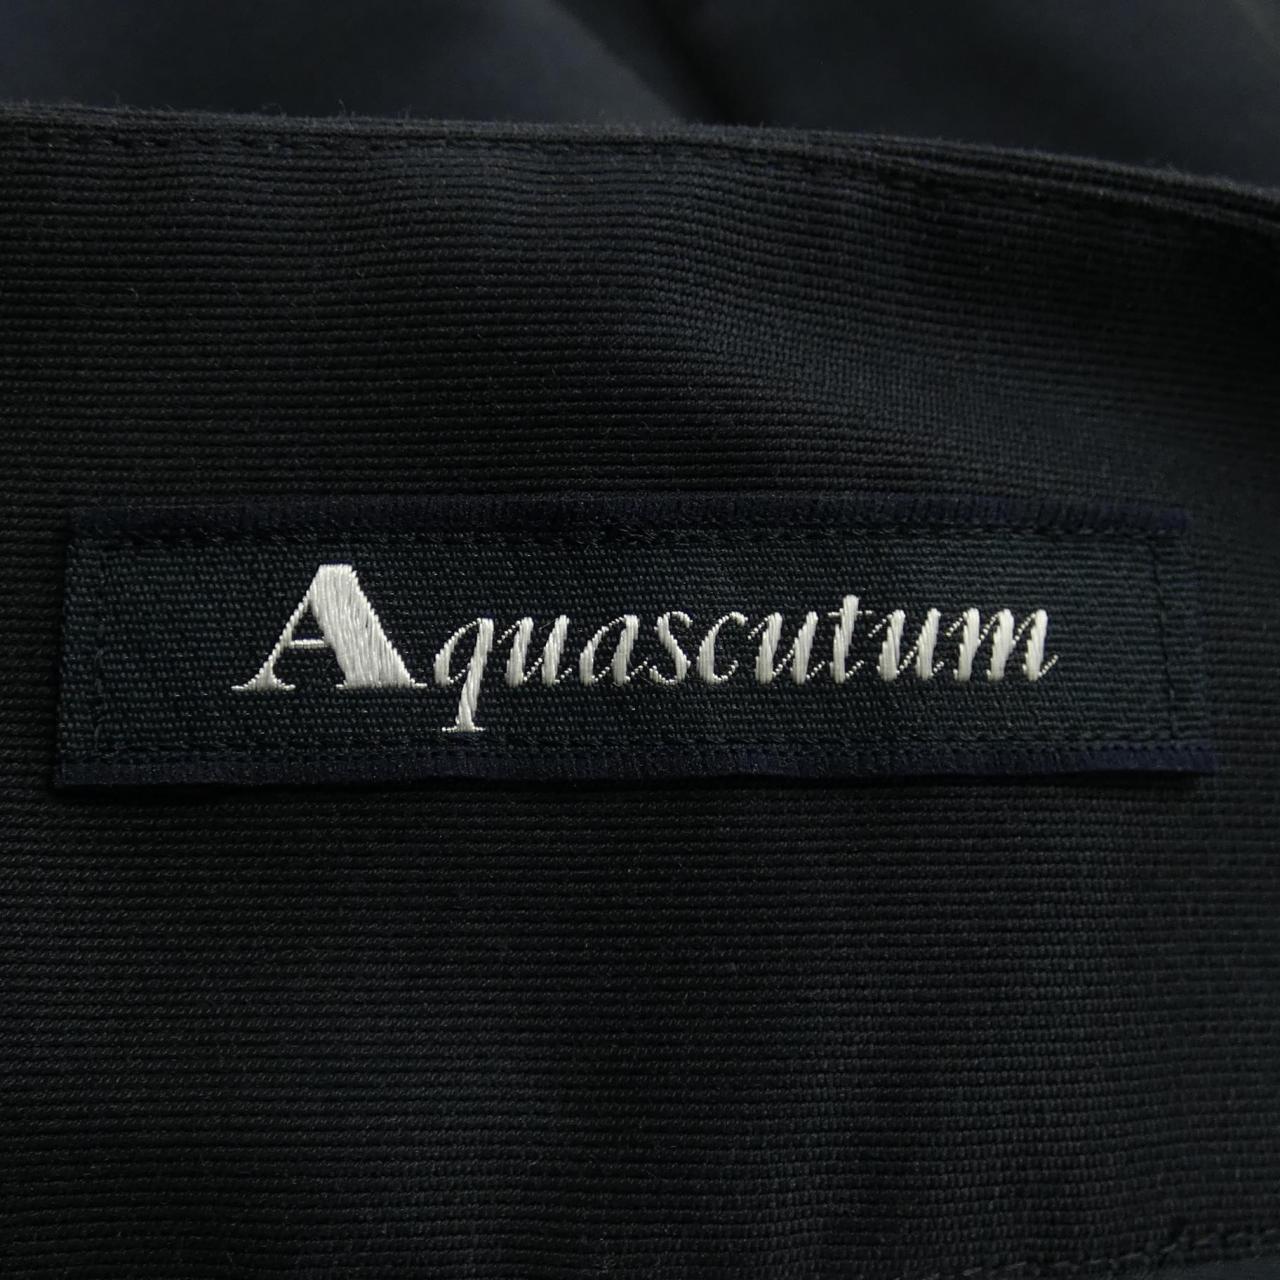 Aquascutum Skirt